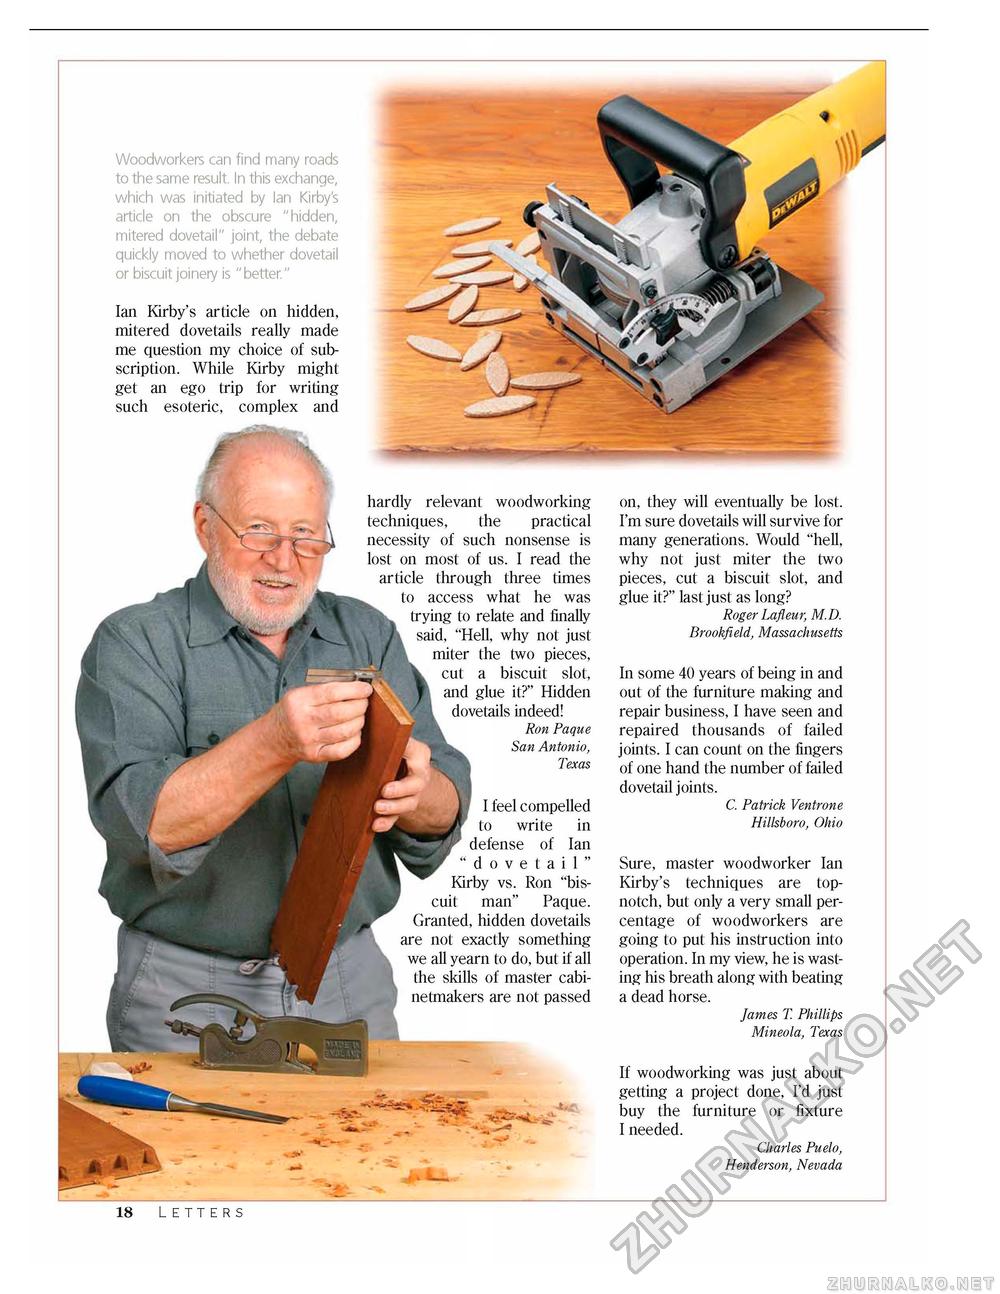 Woodworker